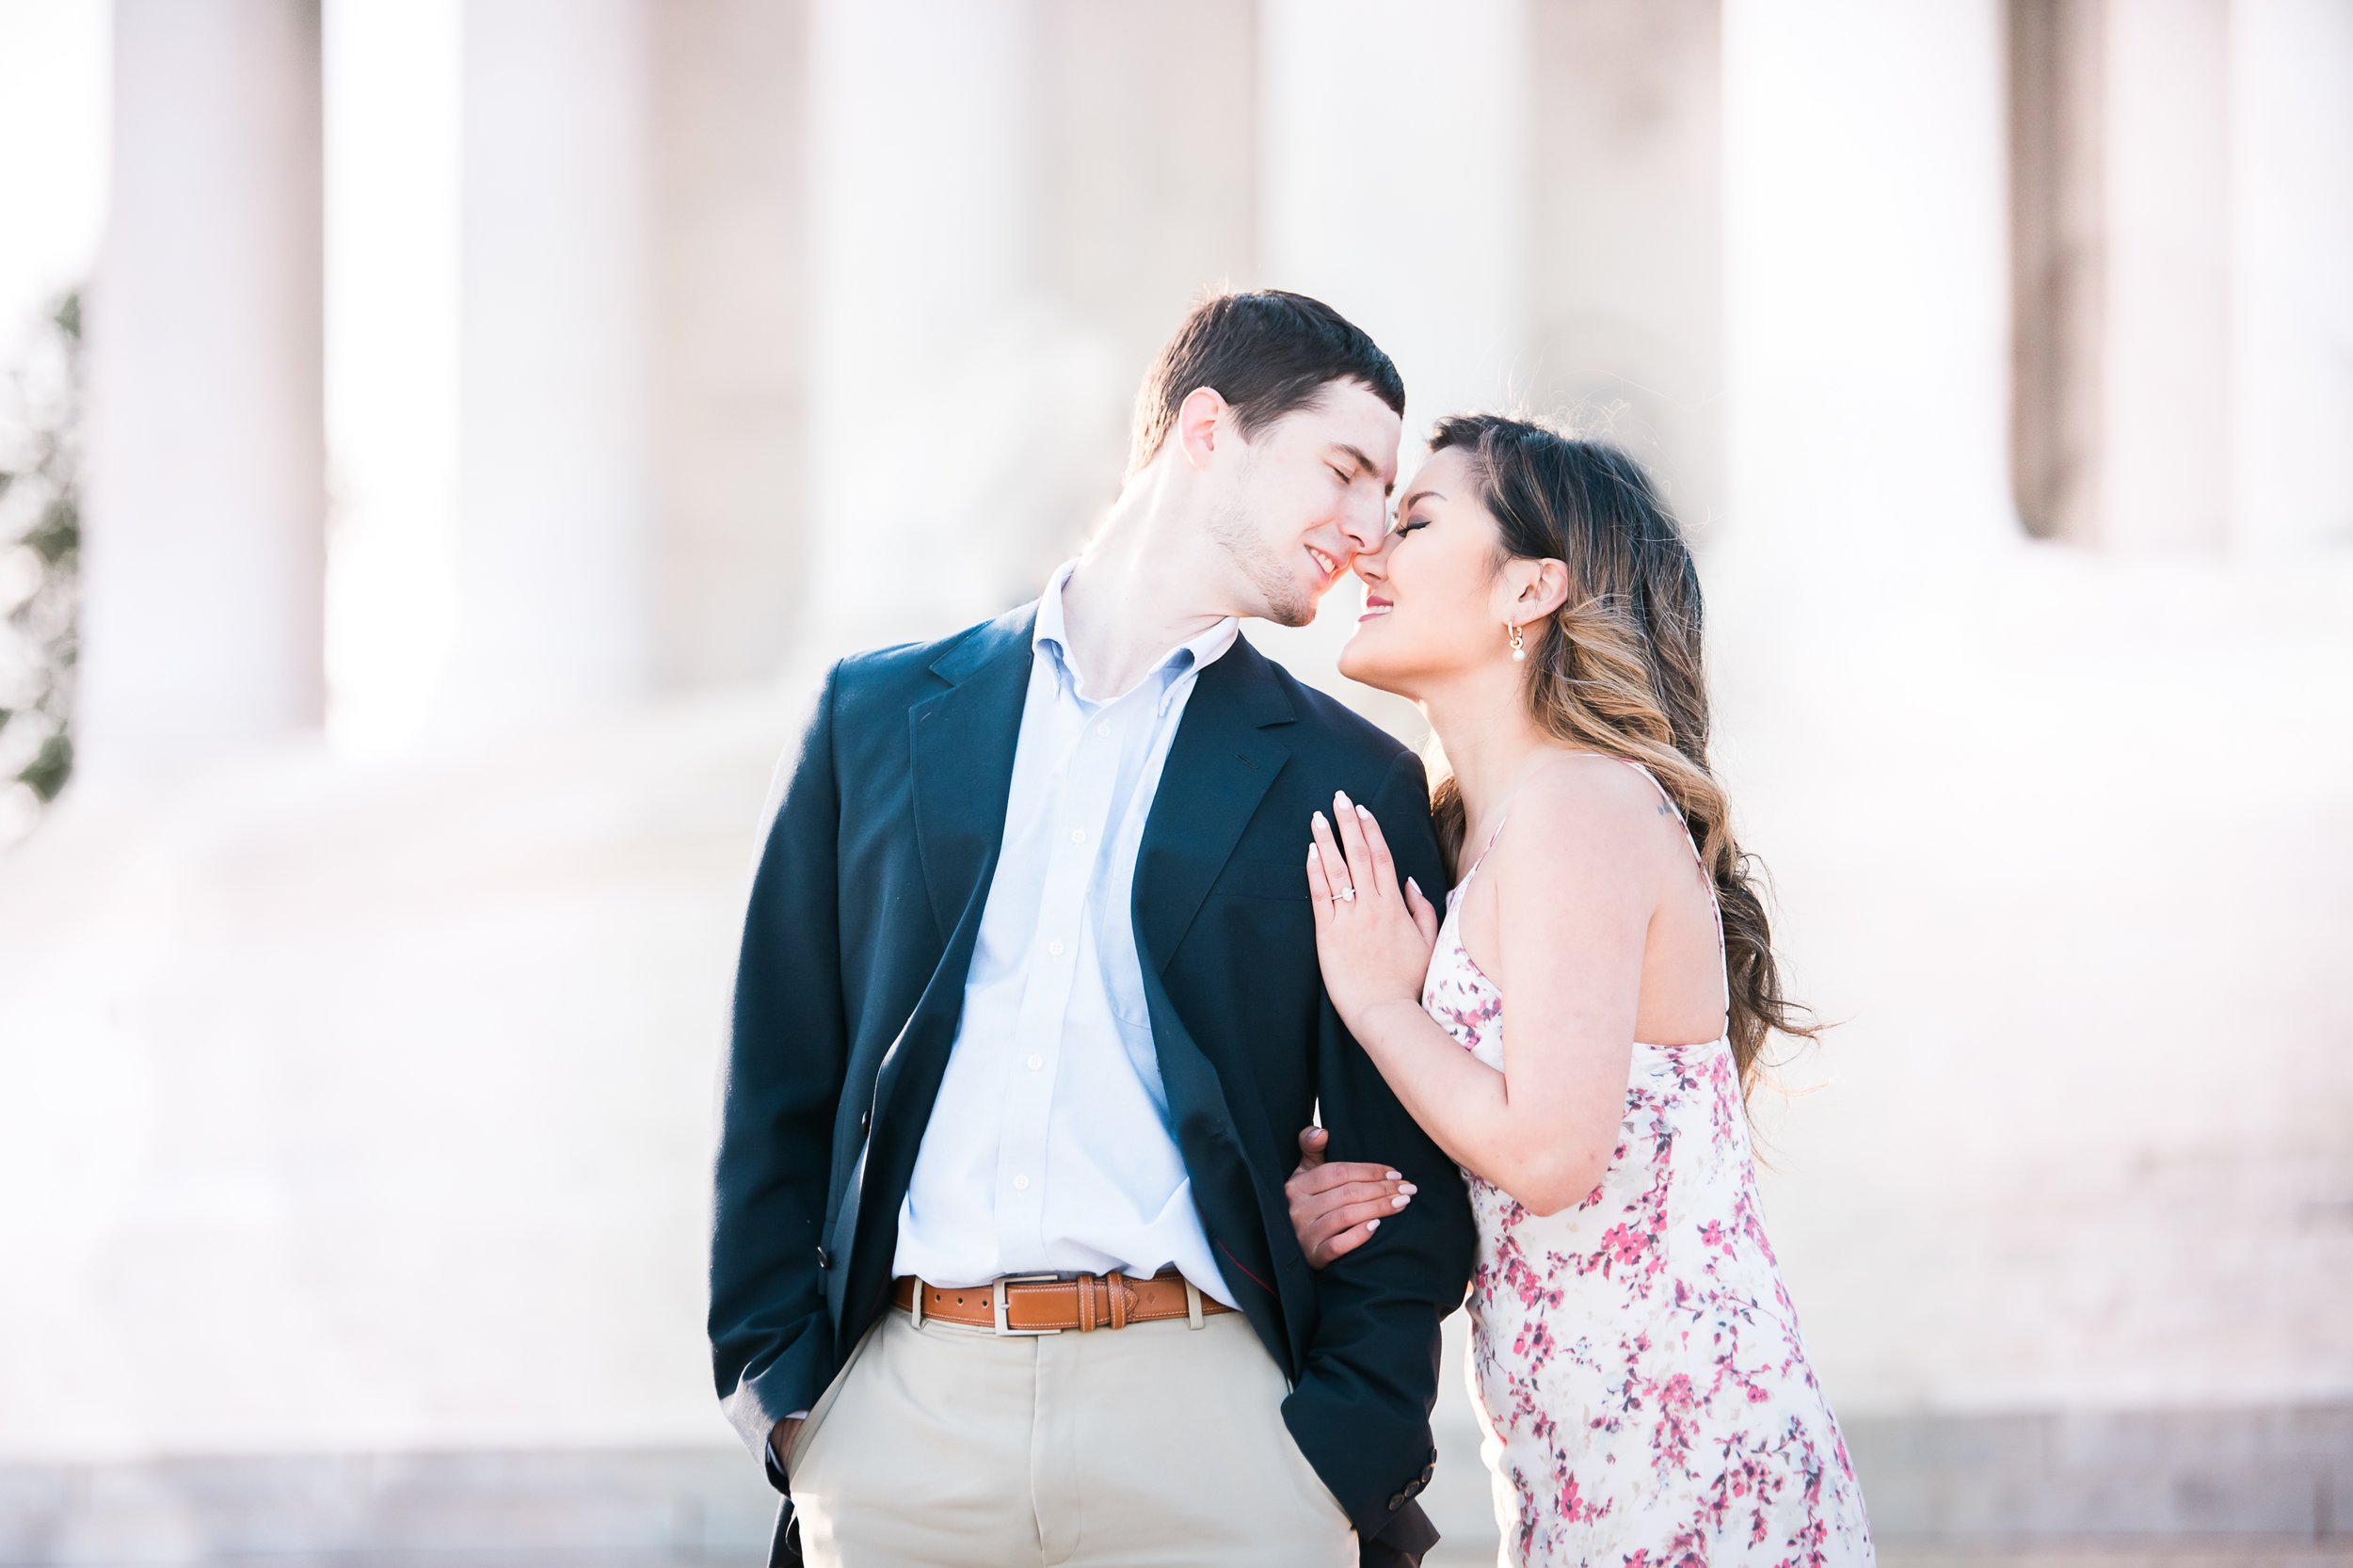 Engagement photo shoot in Washington DC Cherry blossom